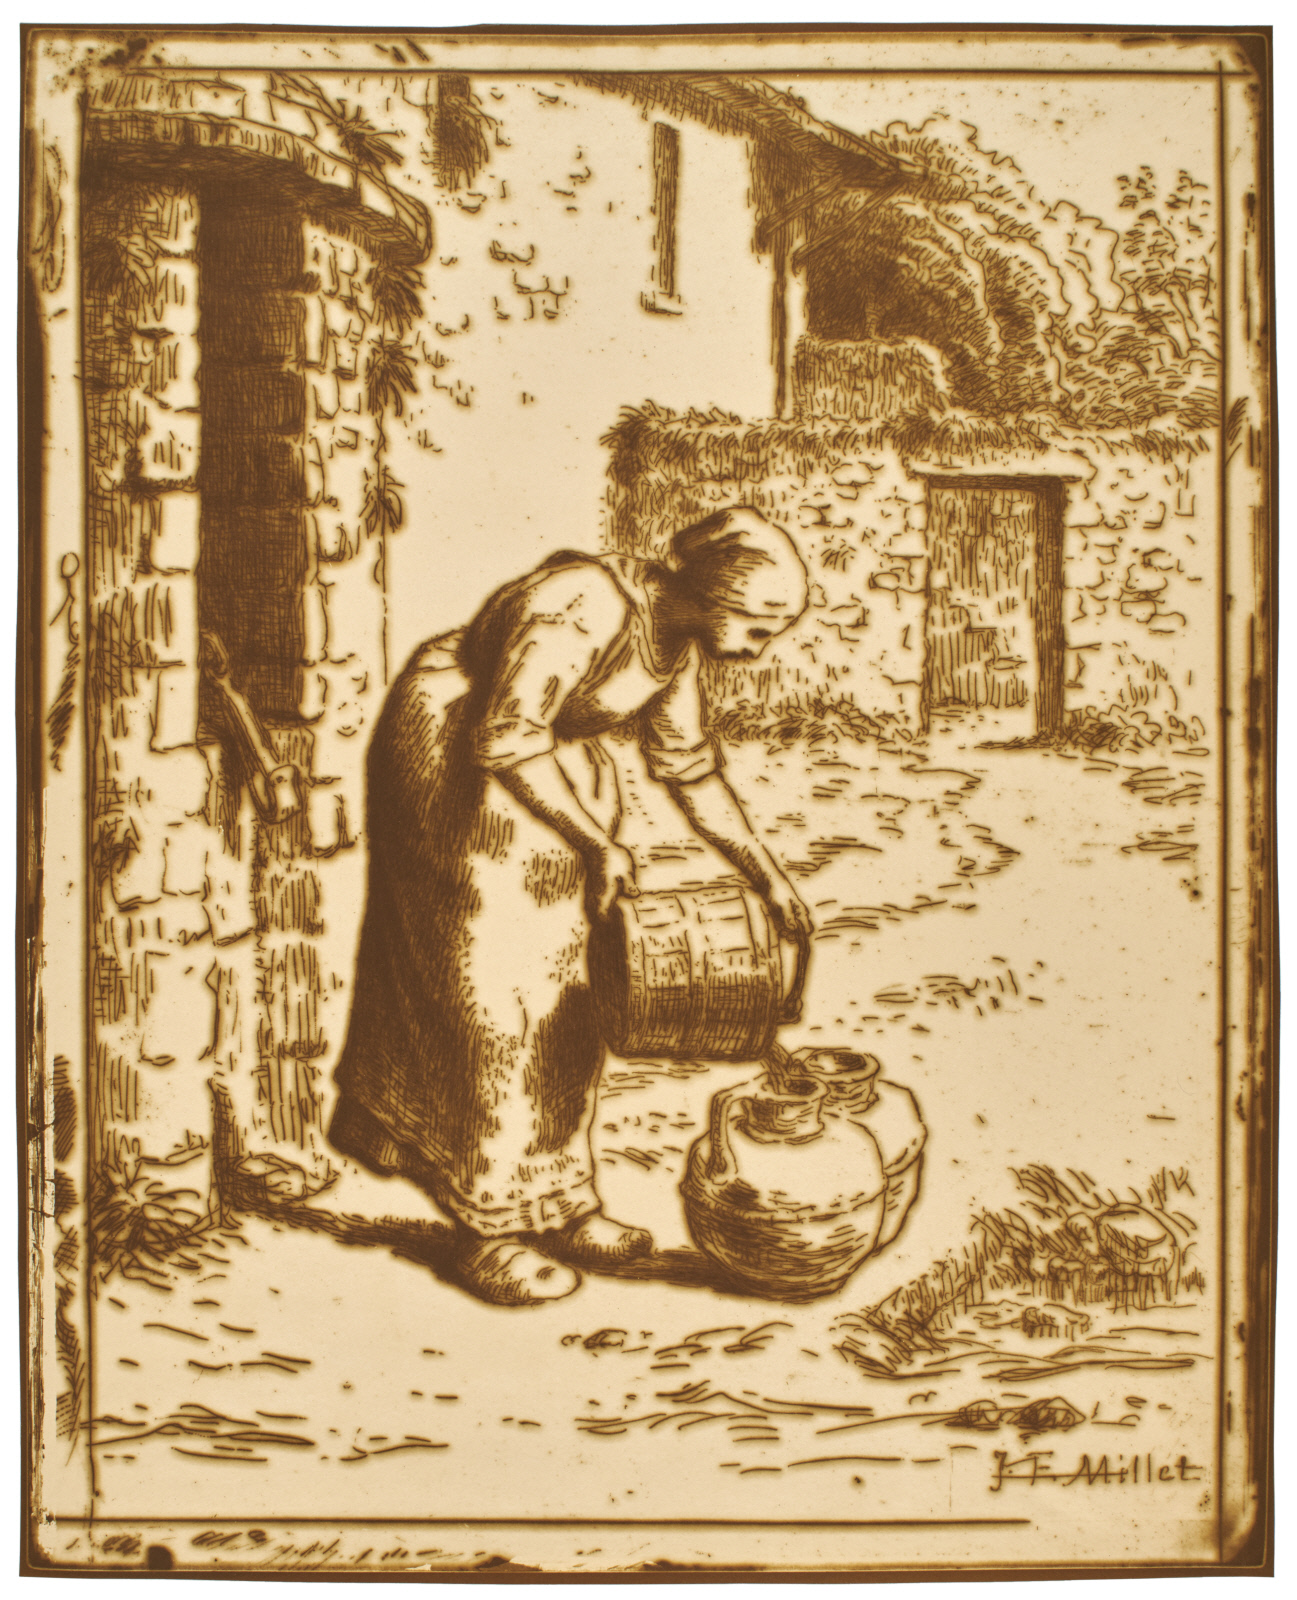 WOMAN EMPTYING A BUCKET (FEMME VIDANT UN SEAU)